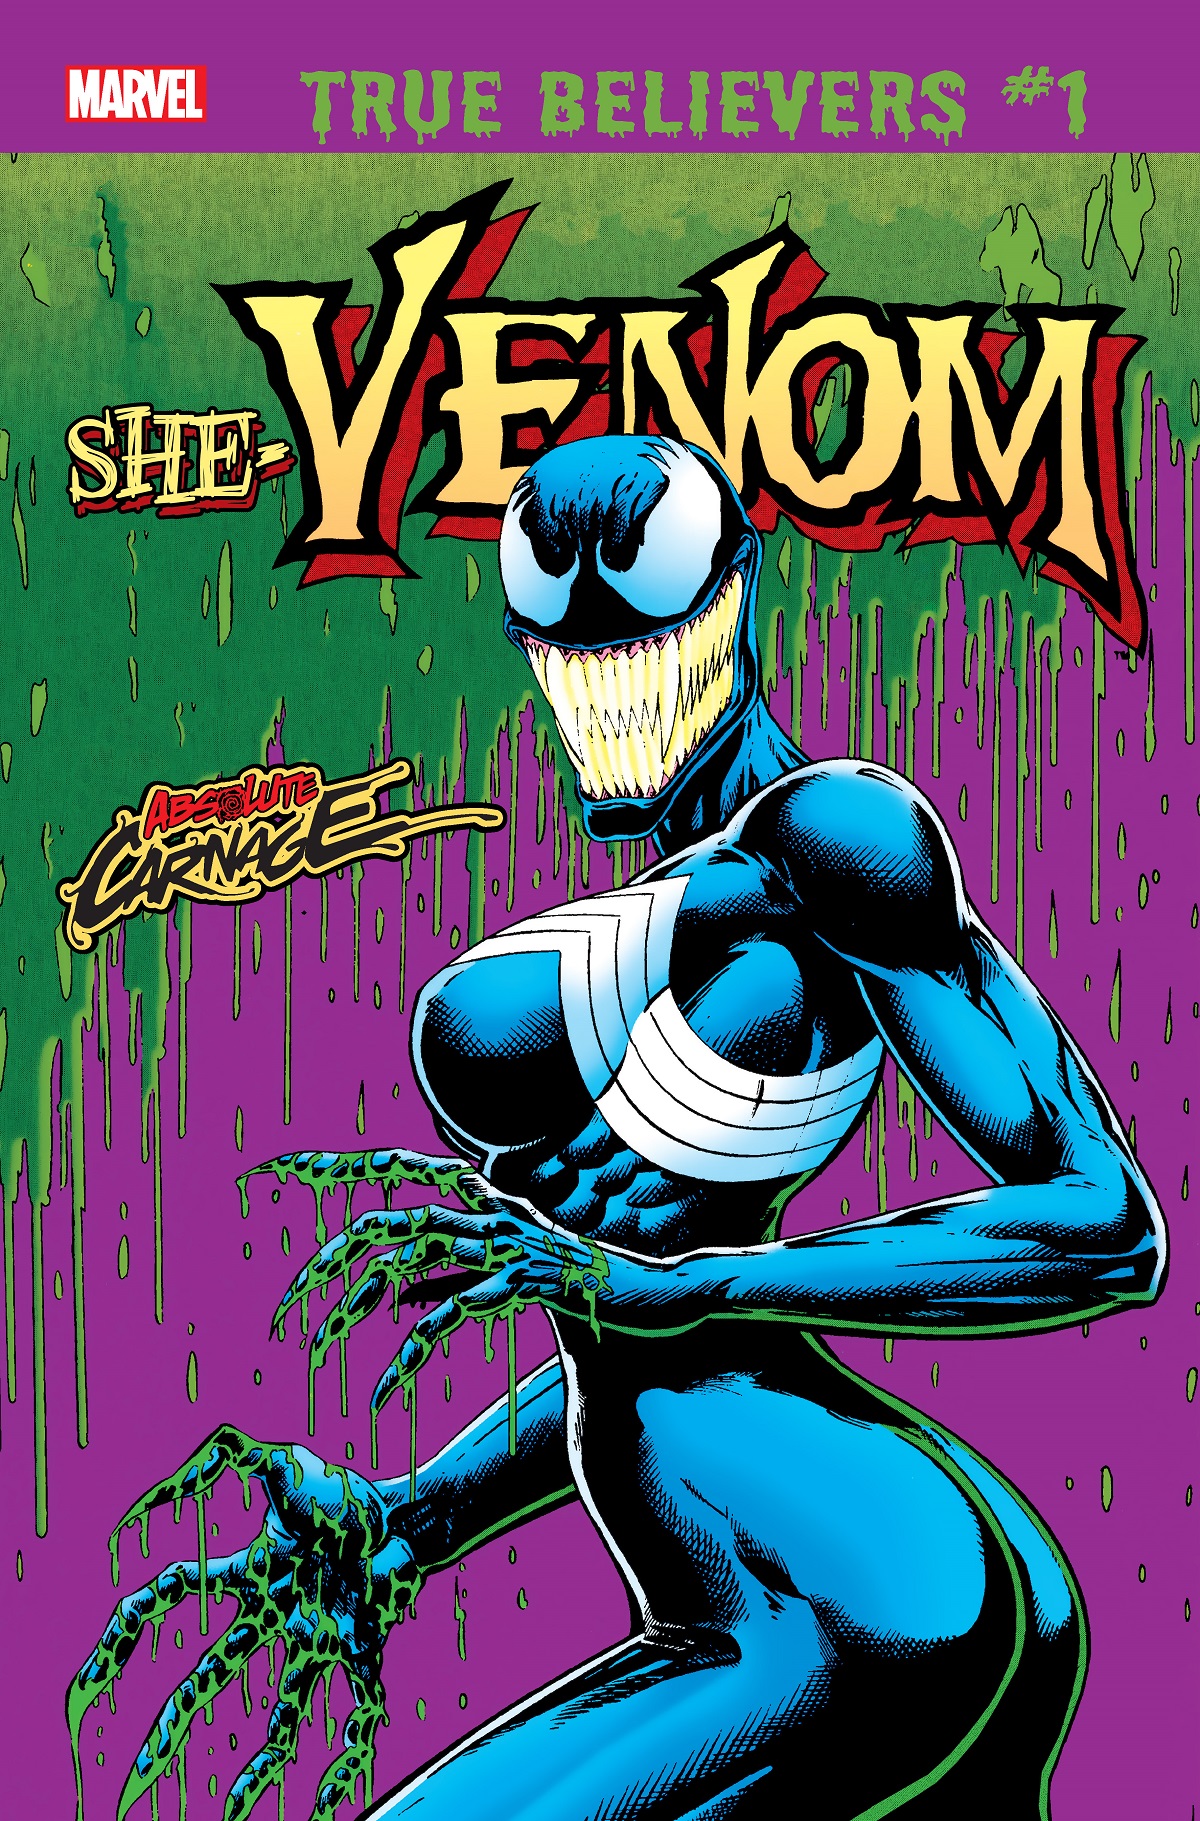 True Believers: Absolute Carnage - She-Venom (2019) #1